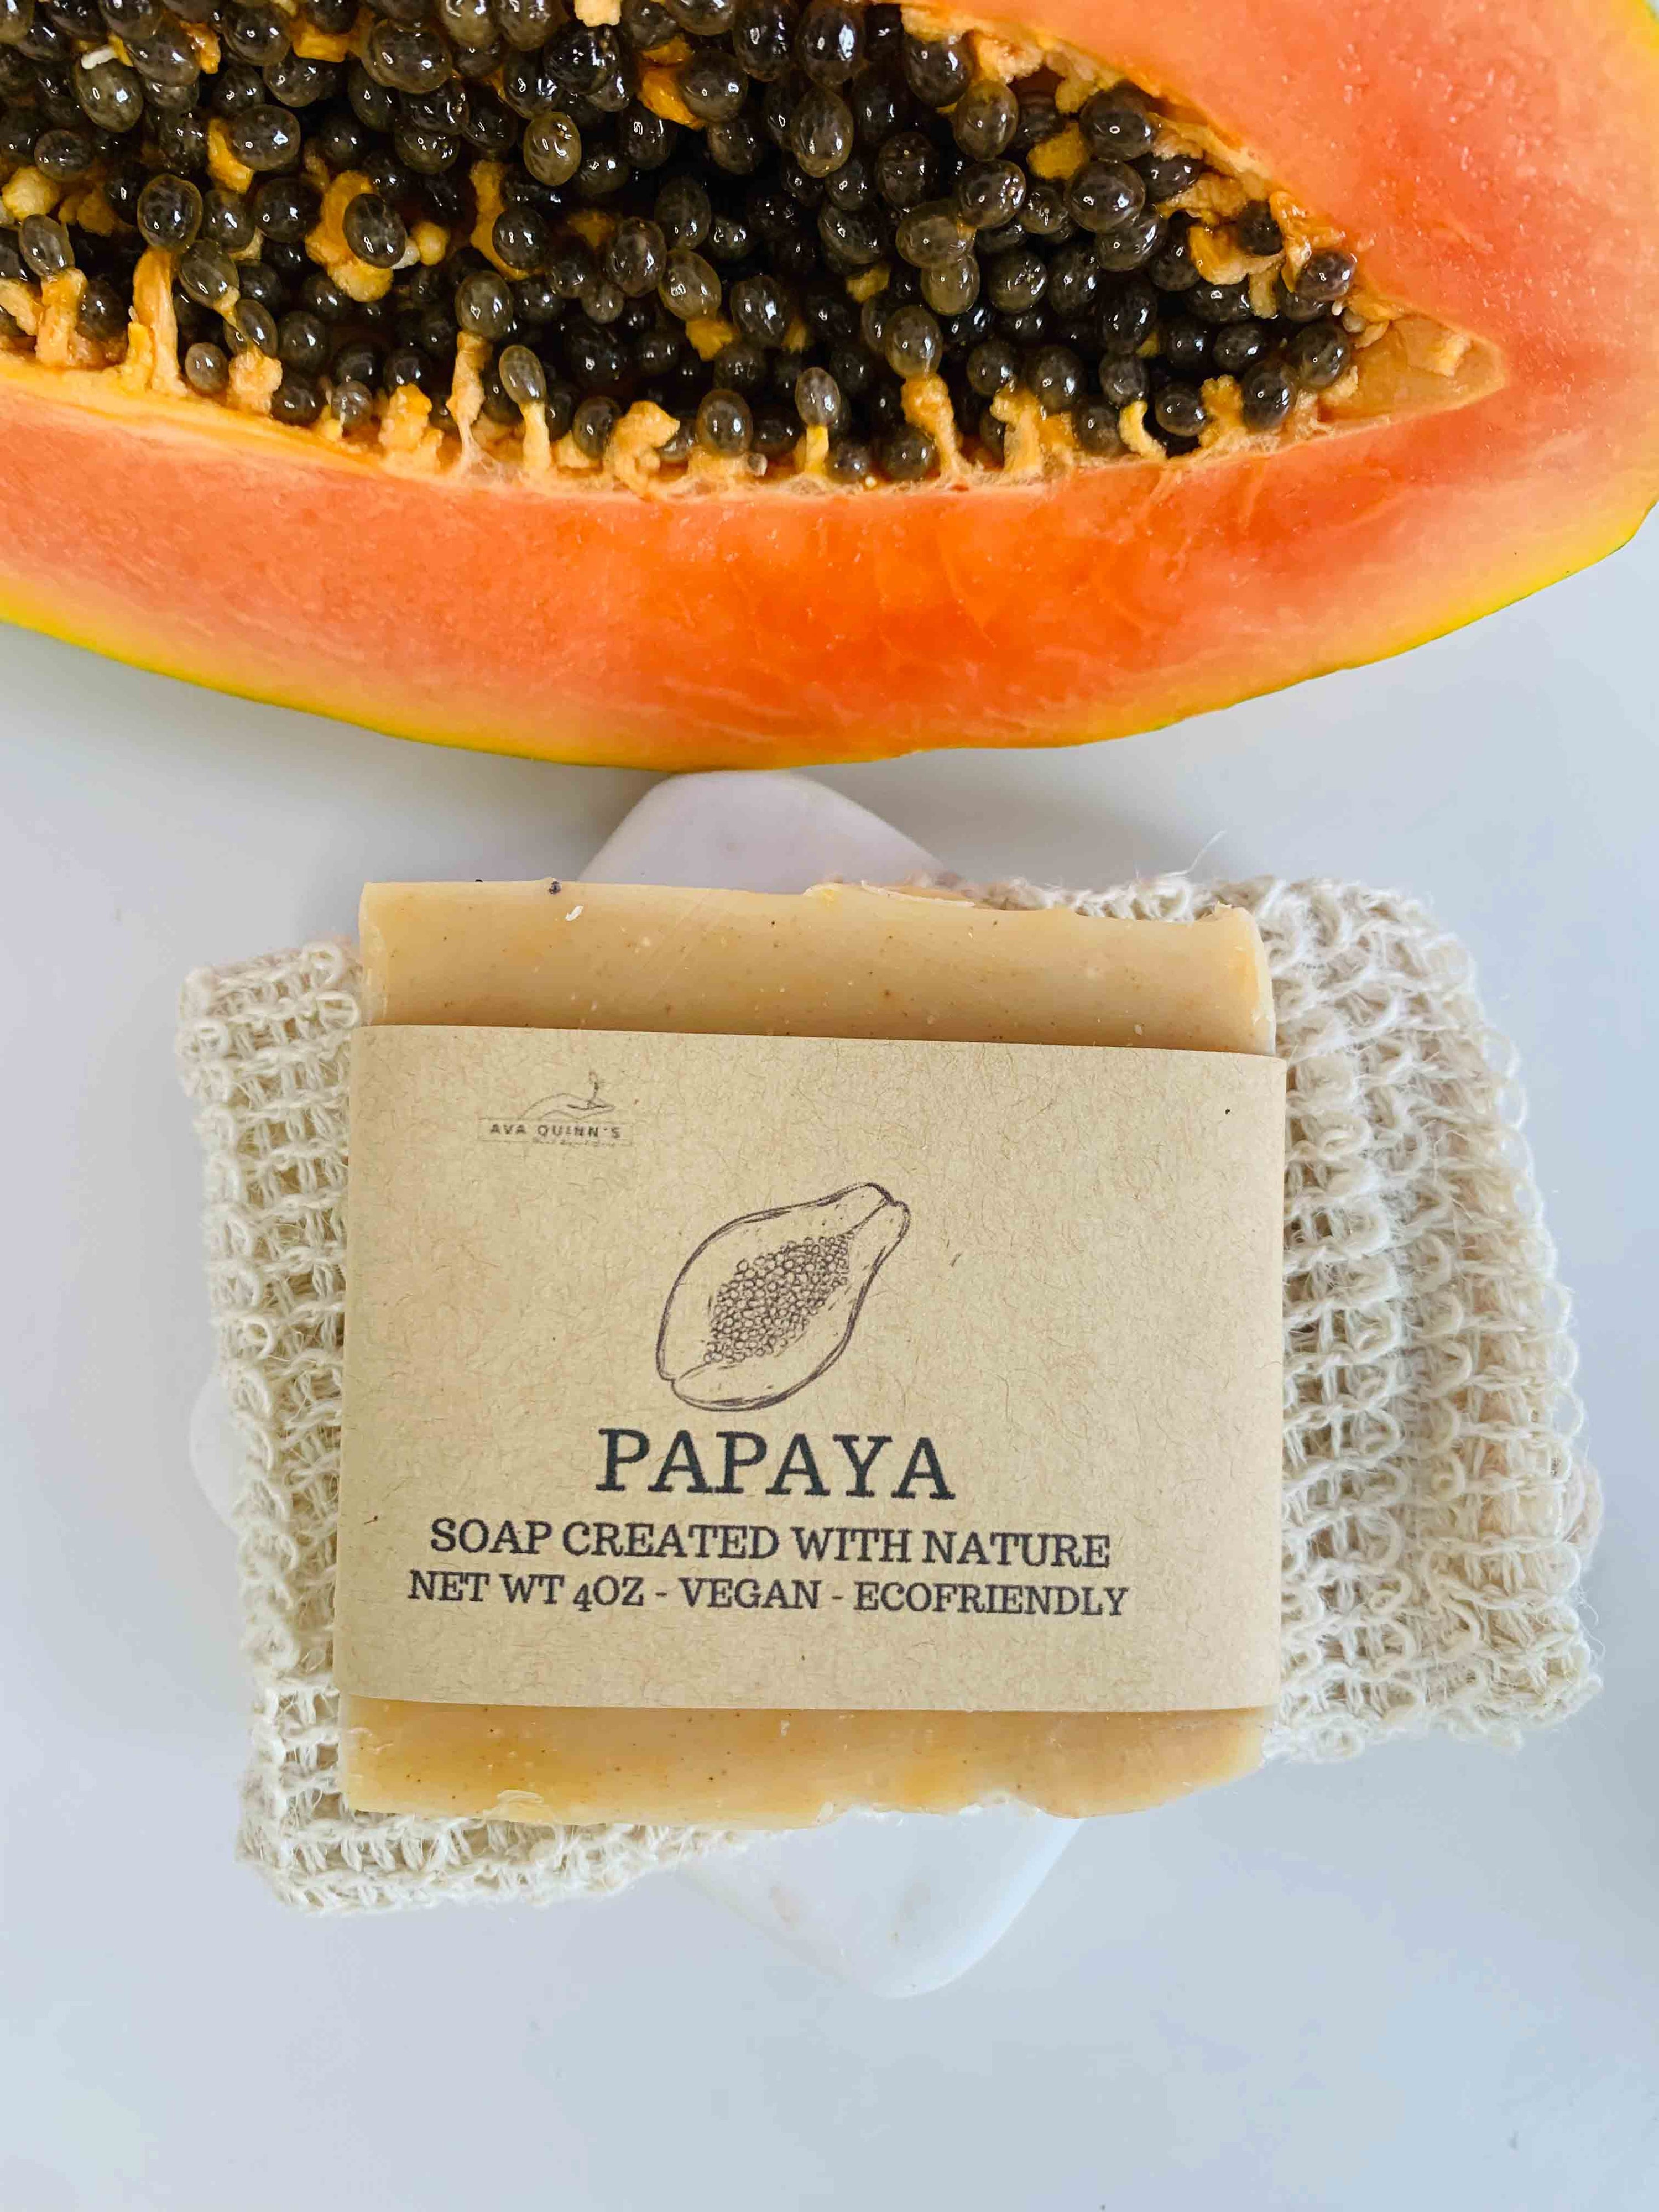 papaya soap made with papaya juice by Ava Quinn's